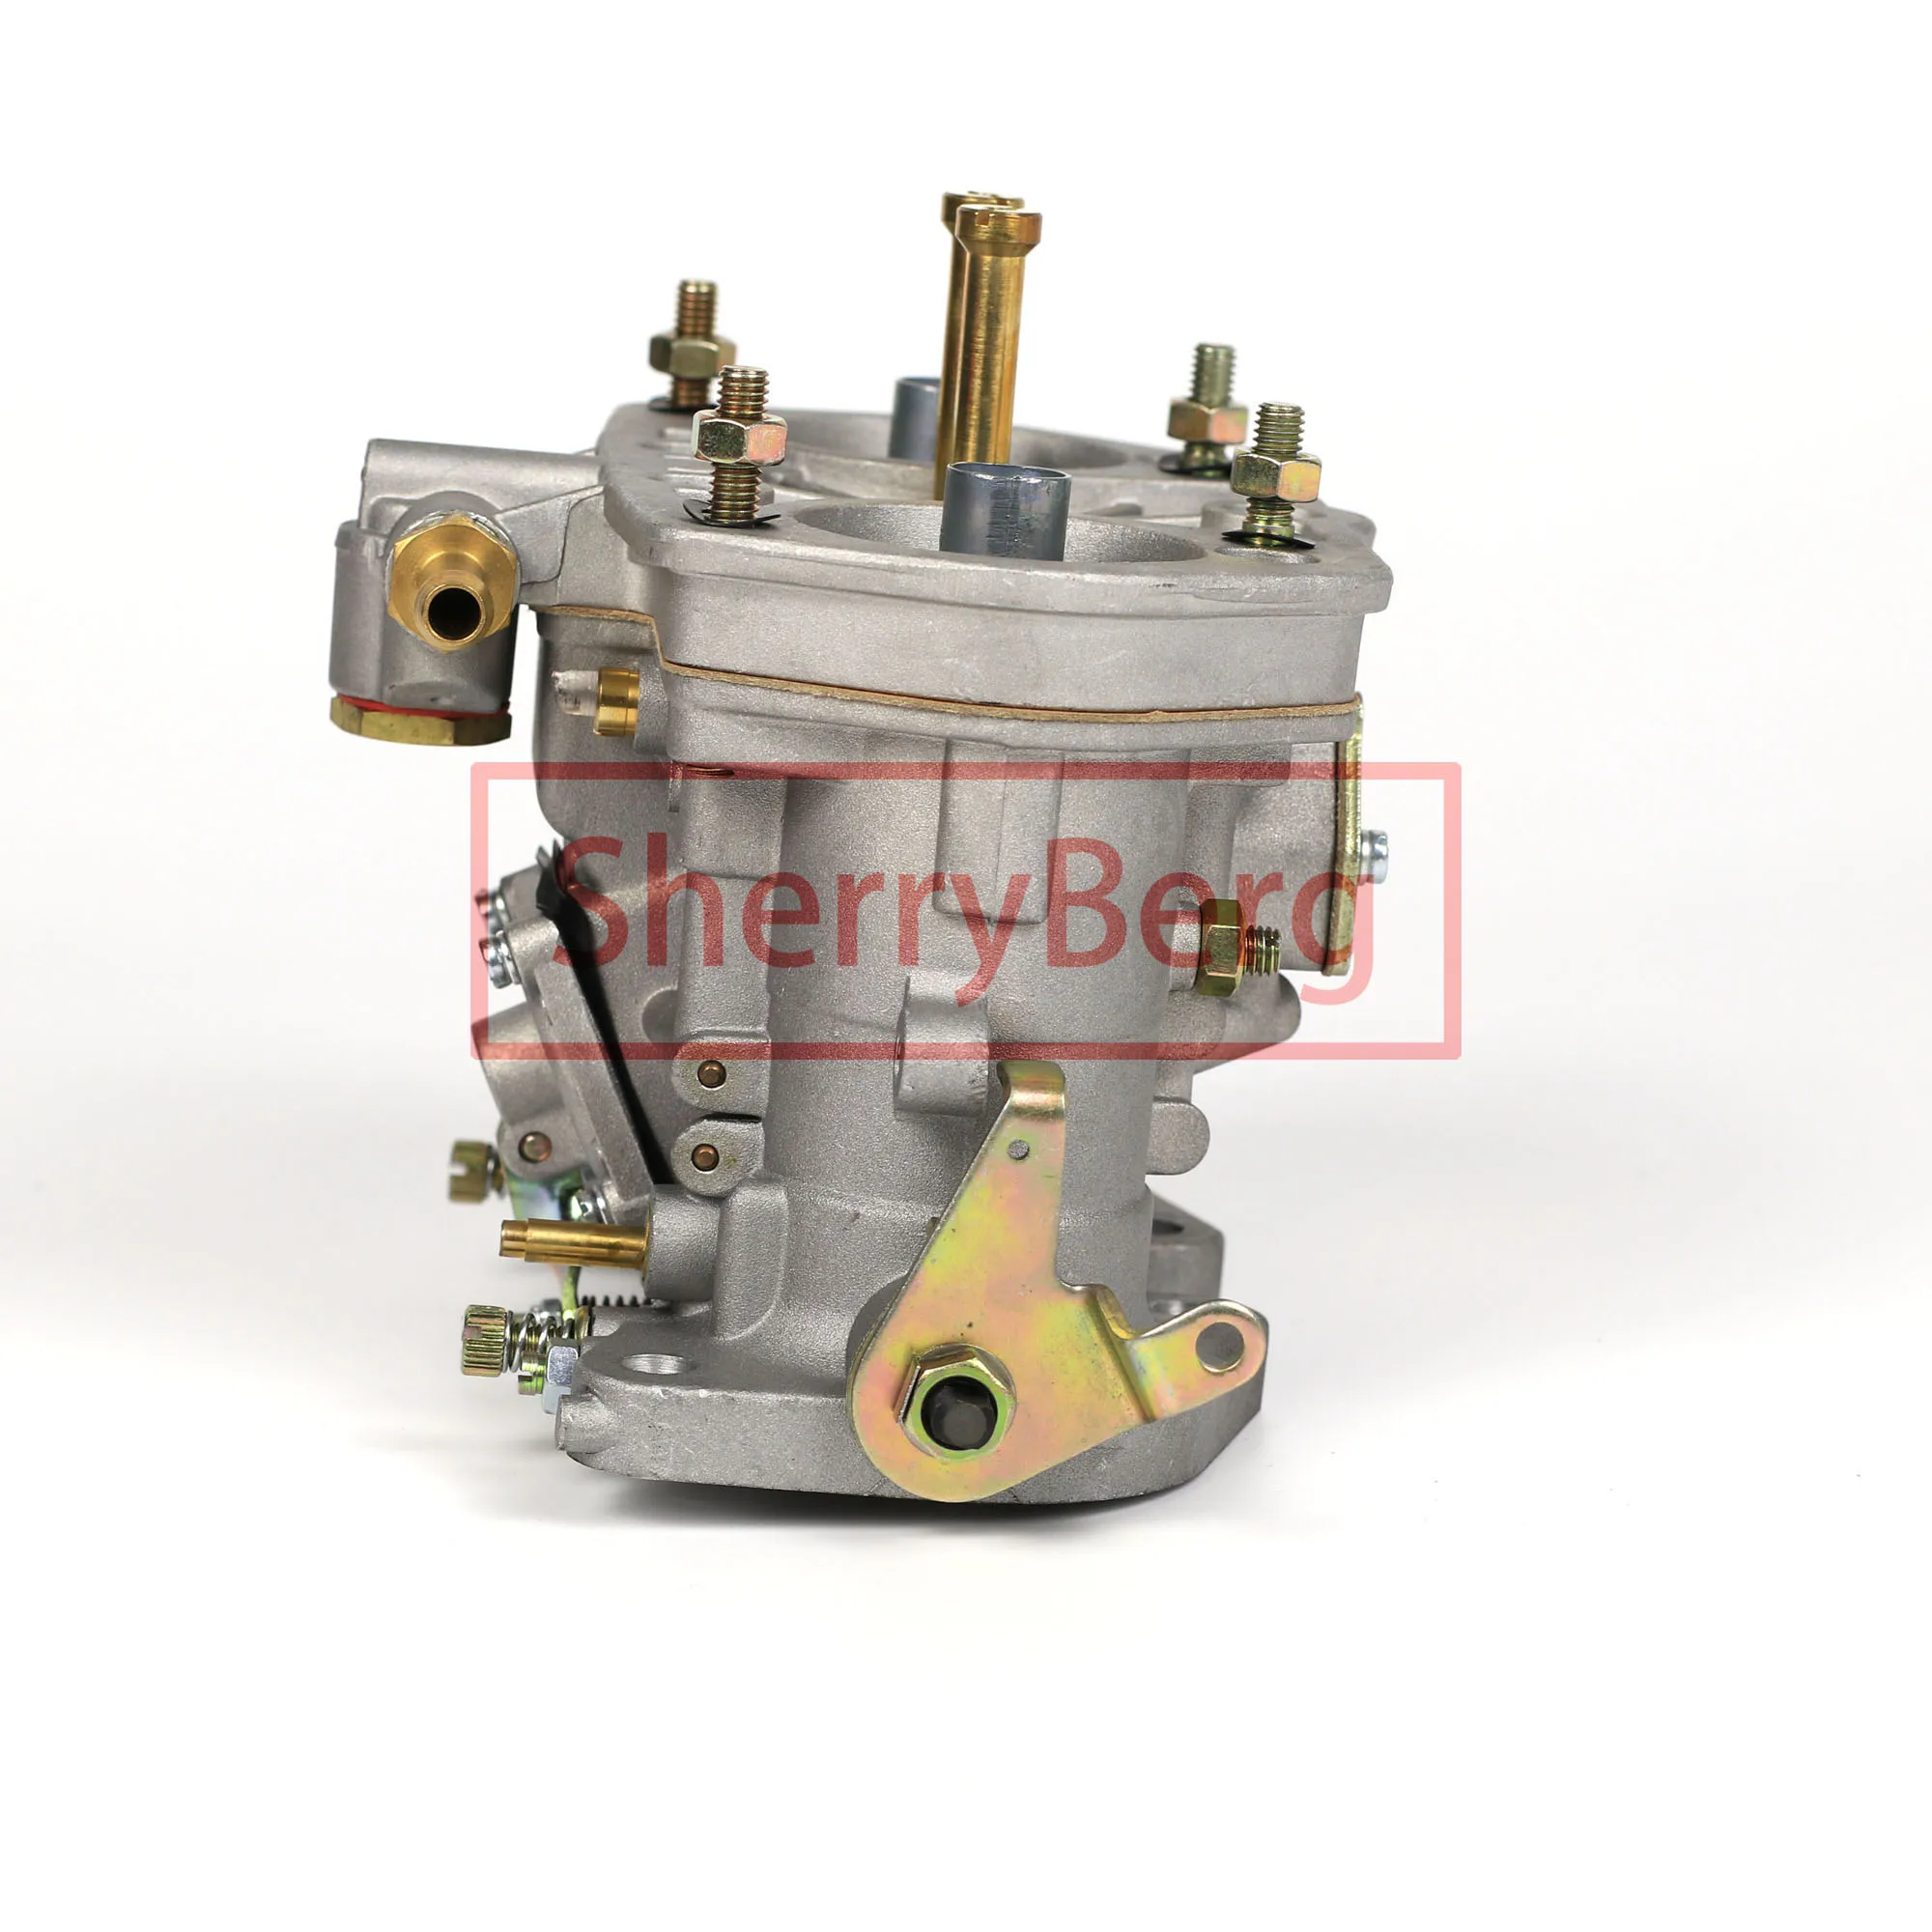 SherryBerg 40IDF carburatore carburatore carburatore motore 2 barilotto per VW Beetle Transporter Fiat pcd fajs 40 IDF 40mm